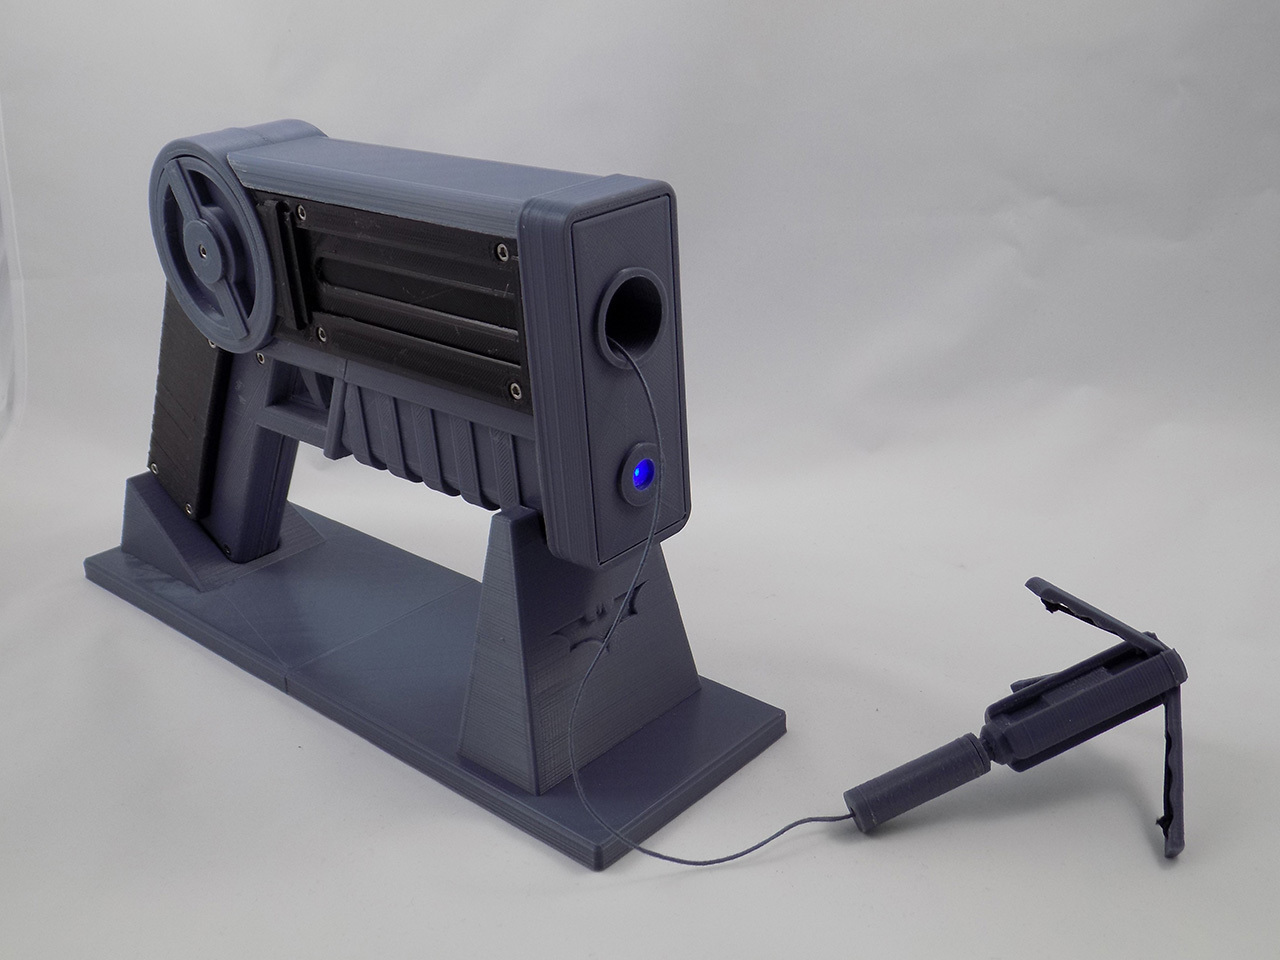 3D Printed Batman Grapple Gun (functional toy gun) by MakersPlace | Pinshape